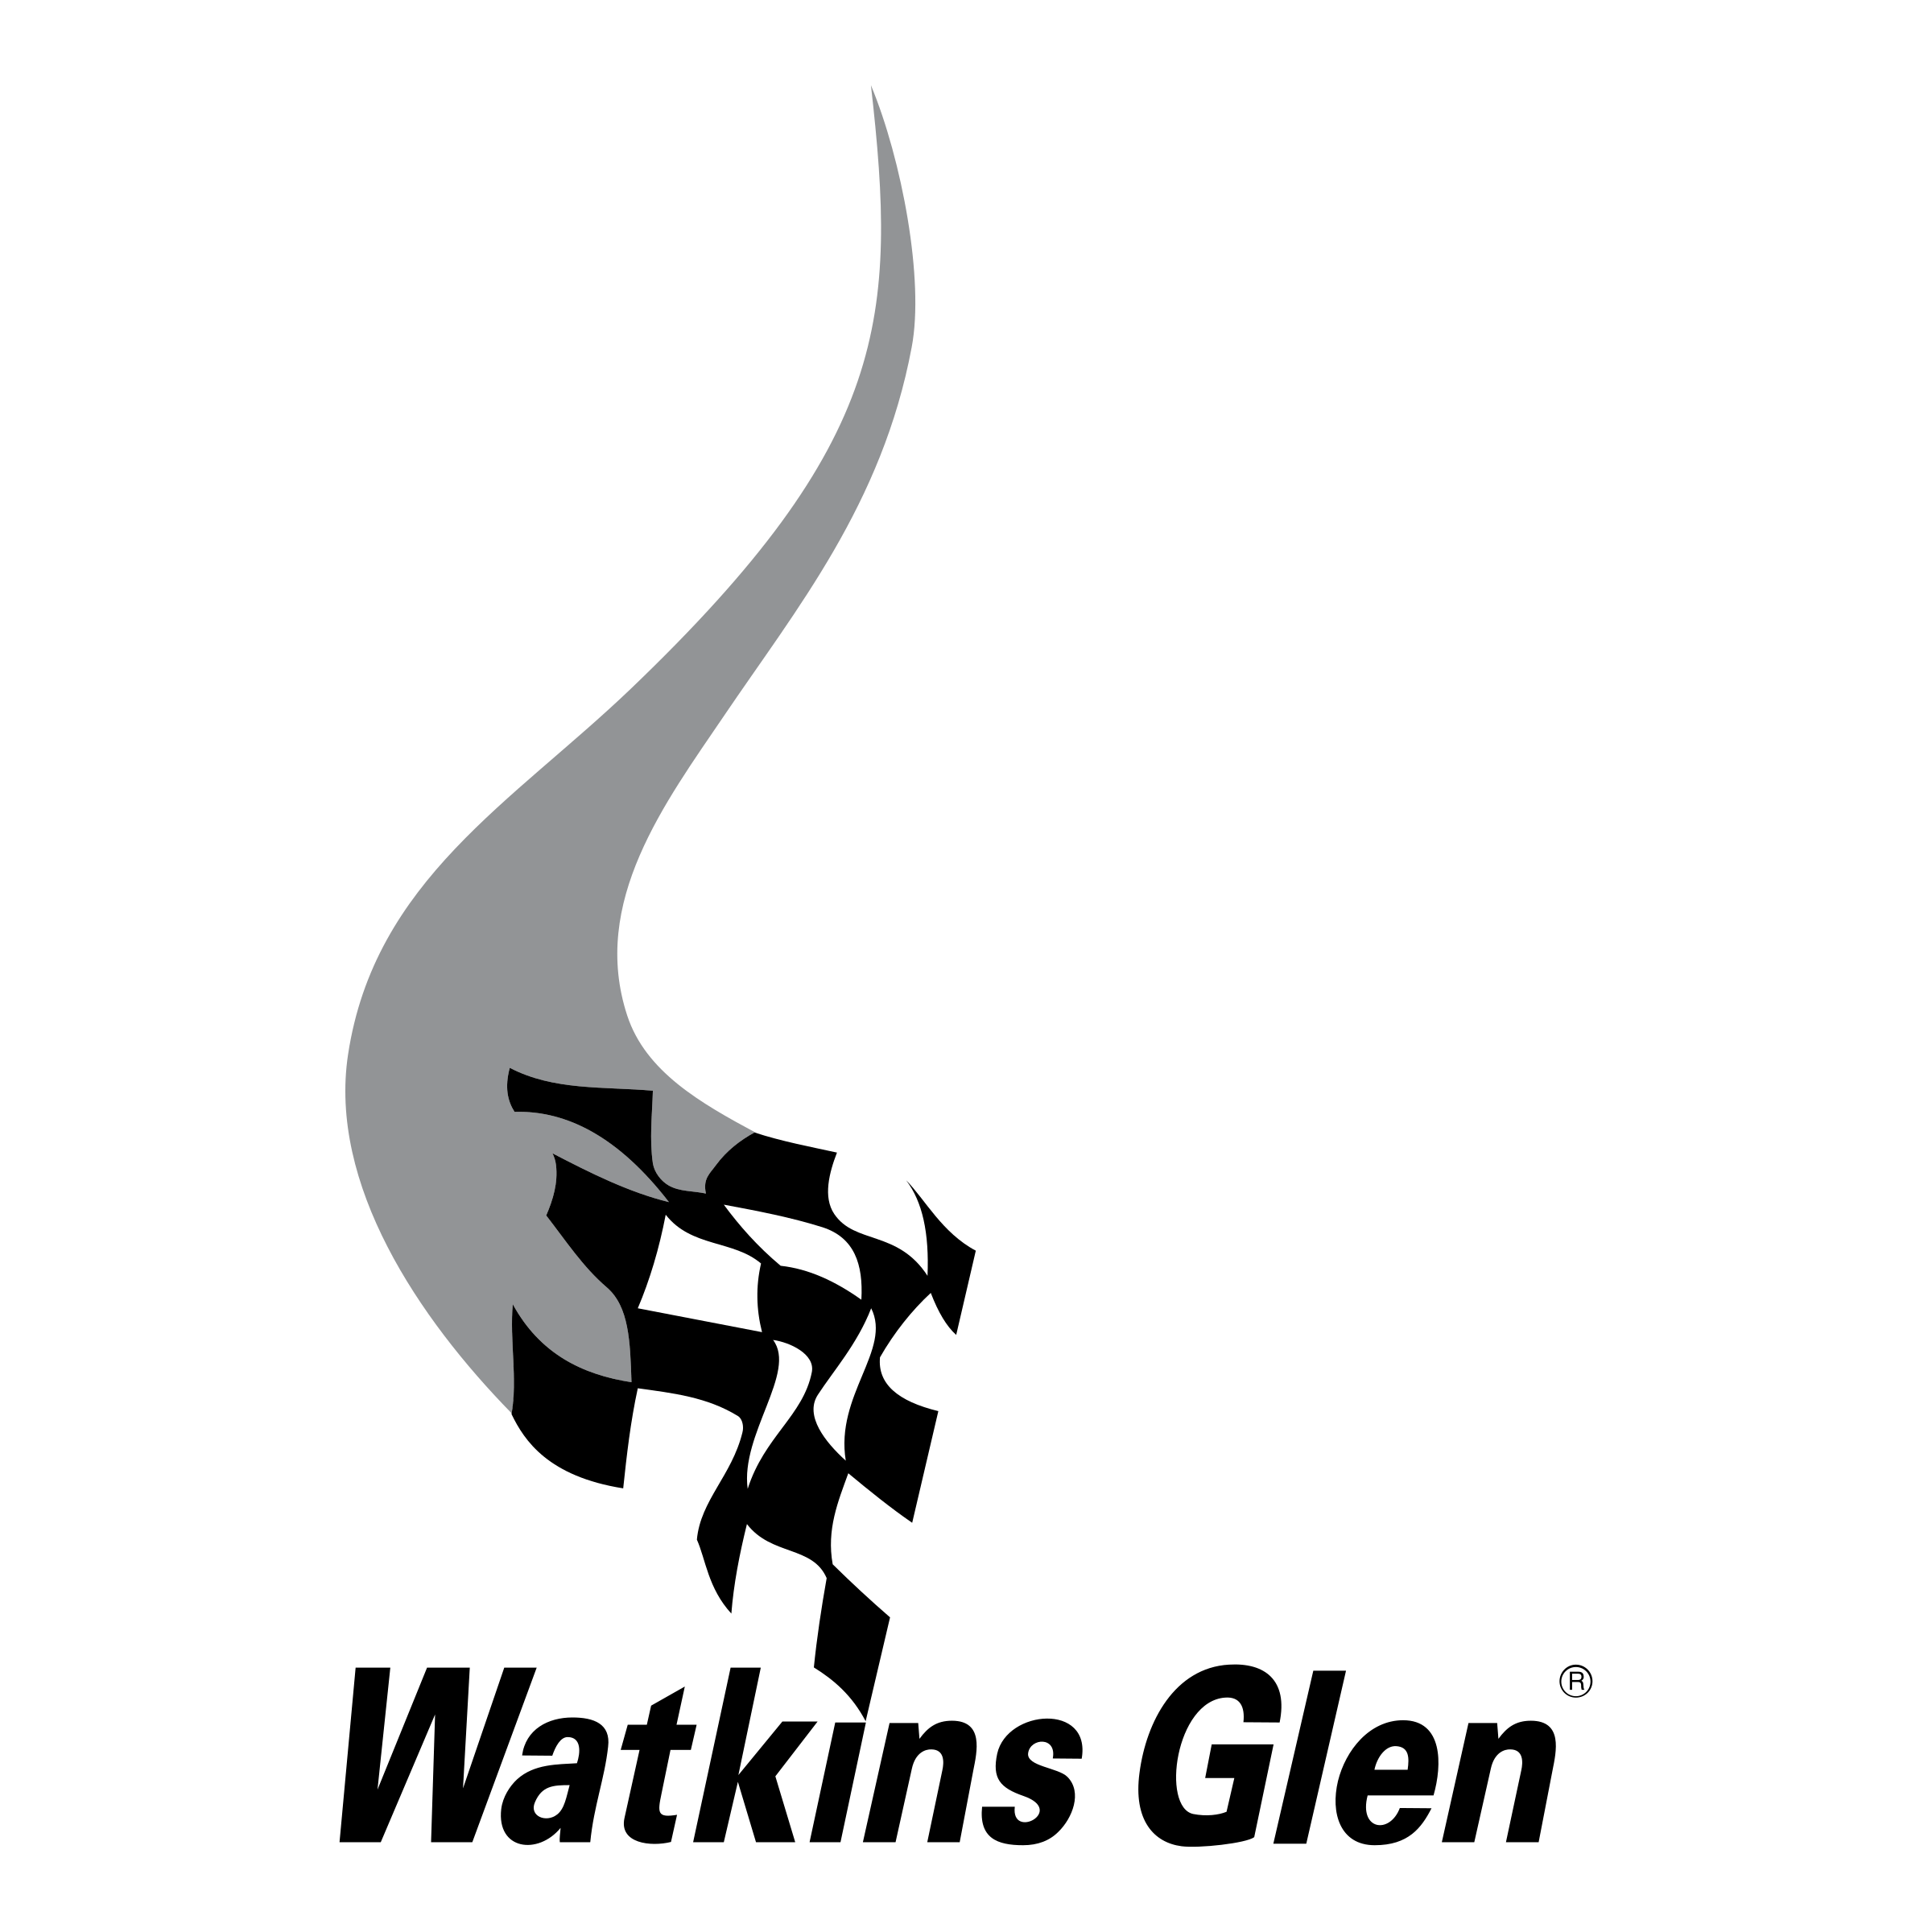 Glen Logo - Watkins Glen Logo PNG Transparent & SVG Vector - Freebie Supply